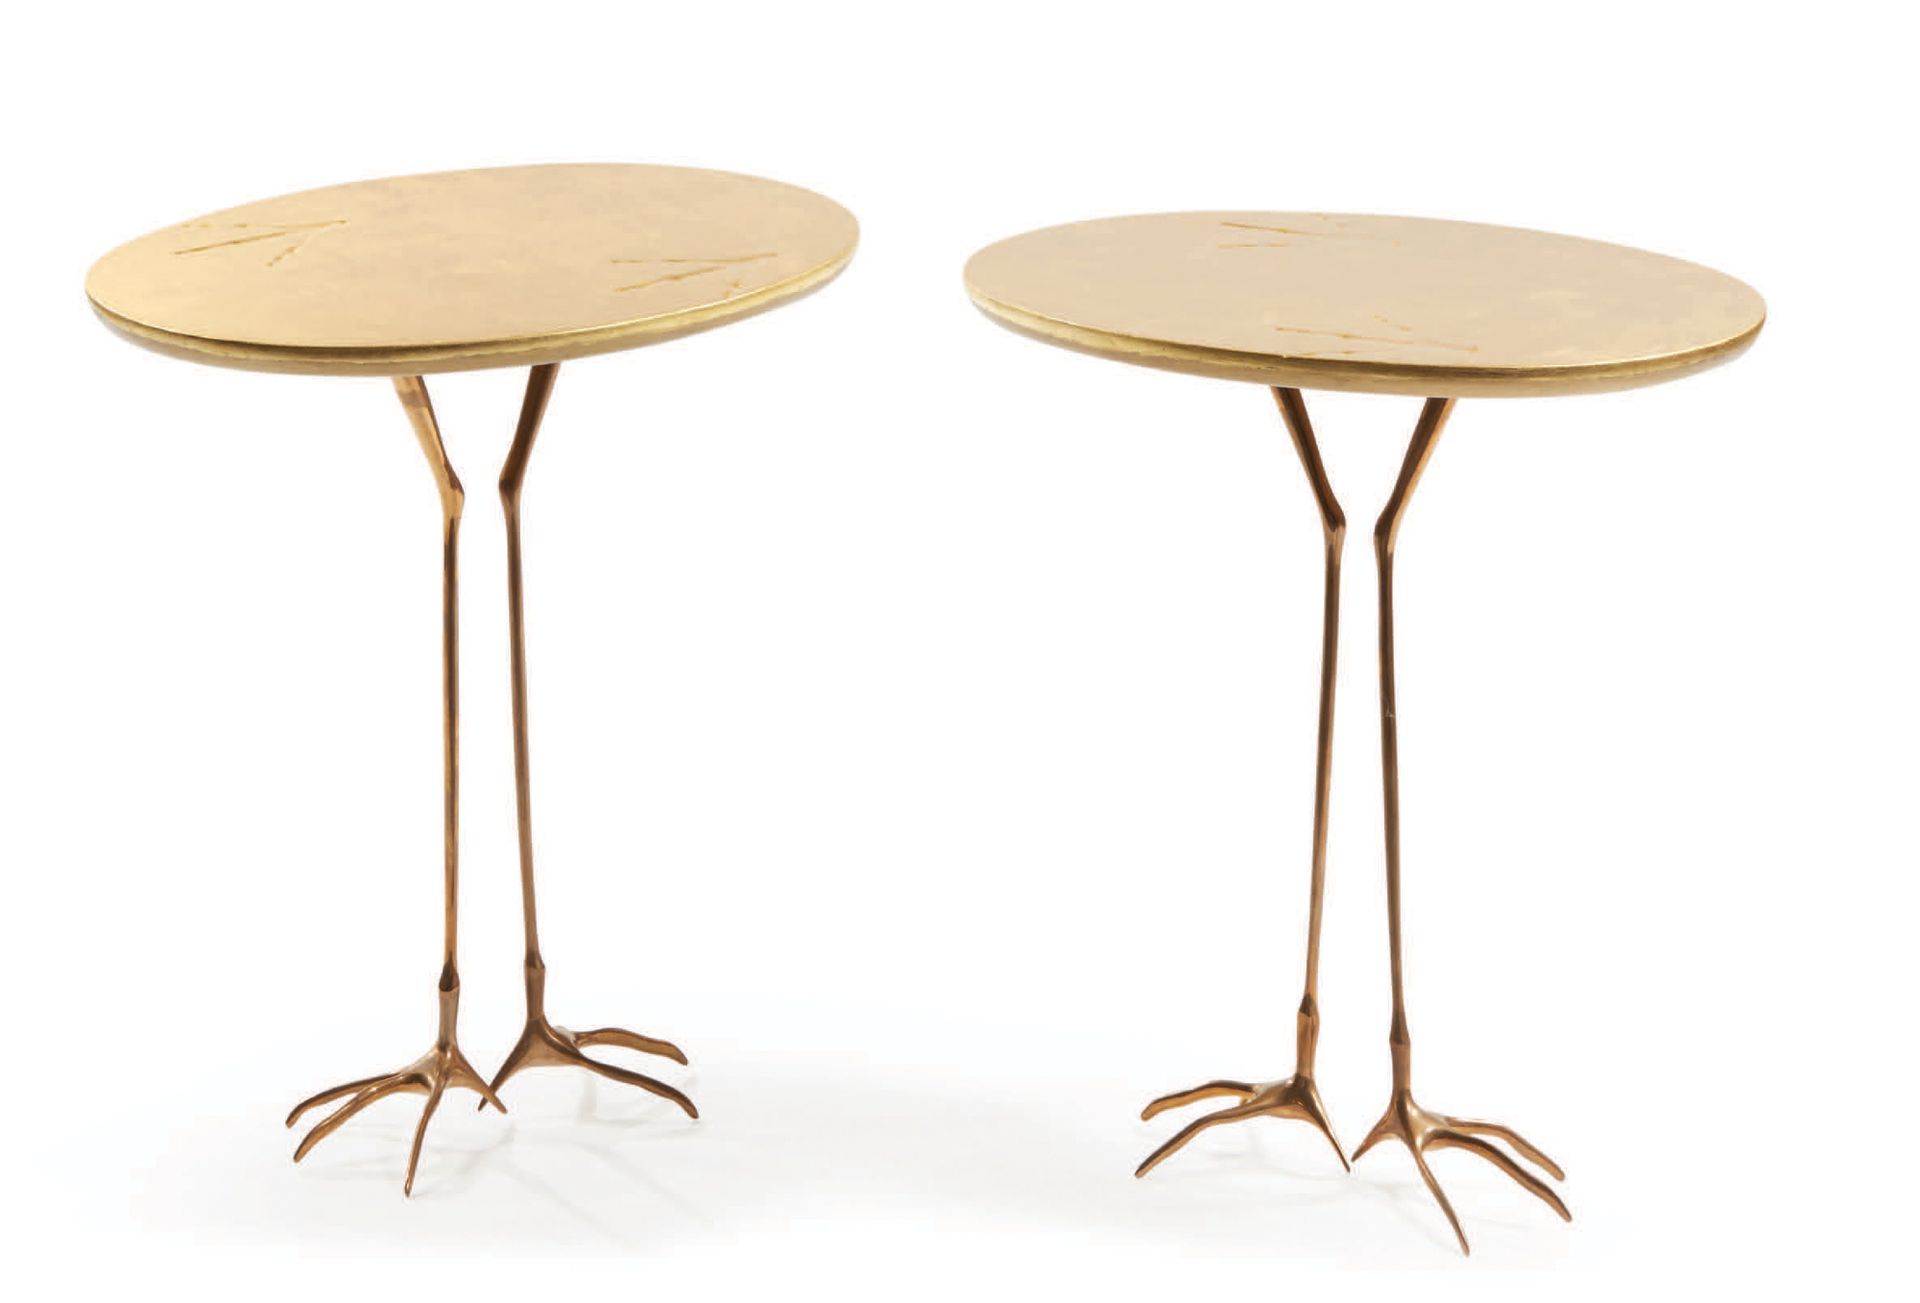 TRAVAIL MODERNE 一对桌子，椭圆形镀金木质桌面，镀金铜质底座
高：84 宽：68 深：53 厘米